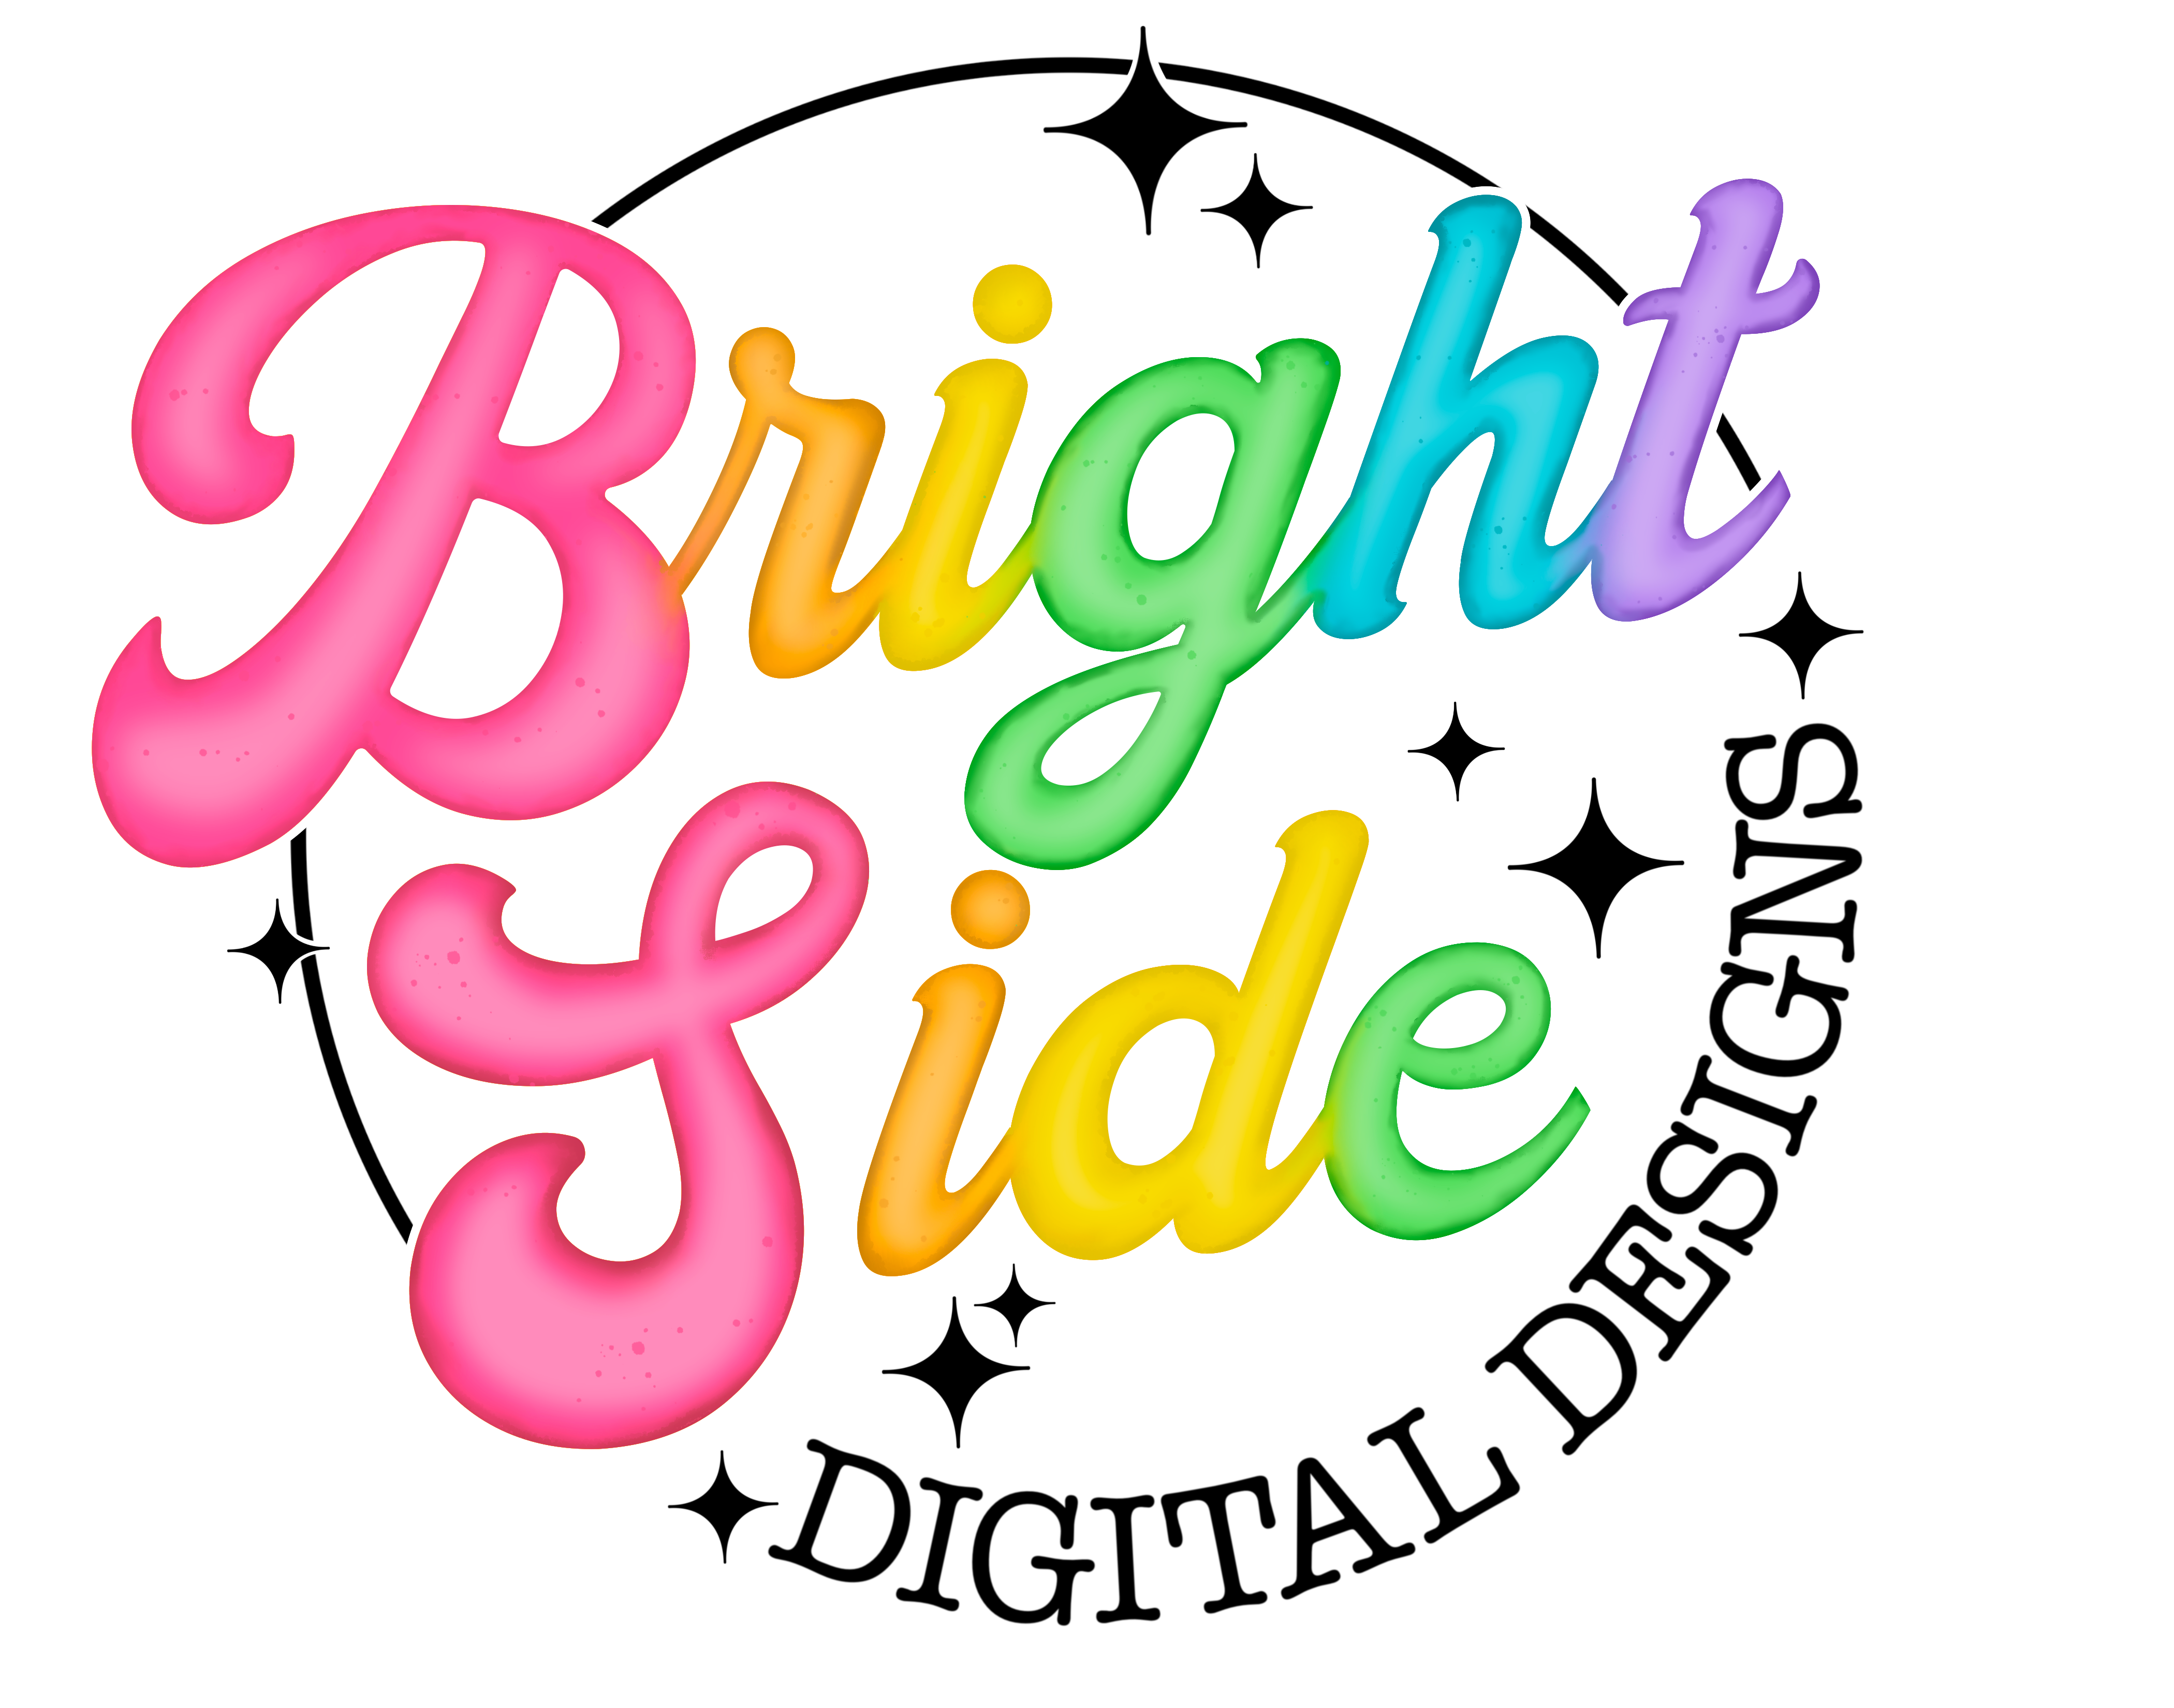 Chunky Doodle Fillable Letter Set (outline and insert) – Bright Side  Digital Designs